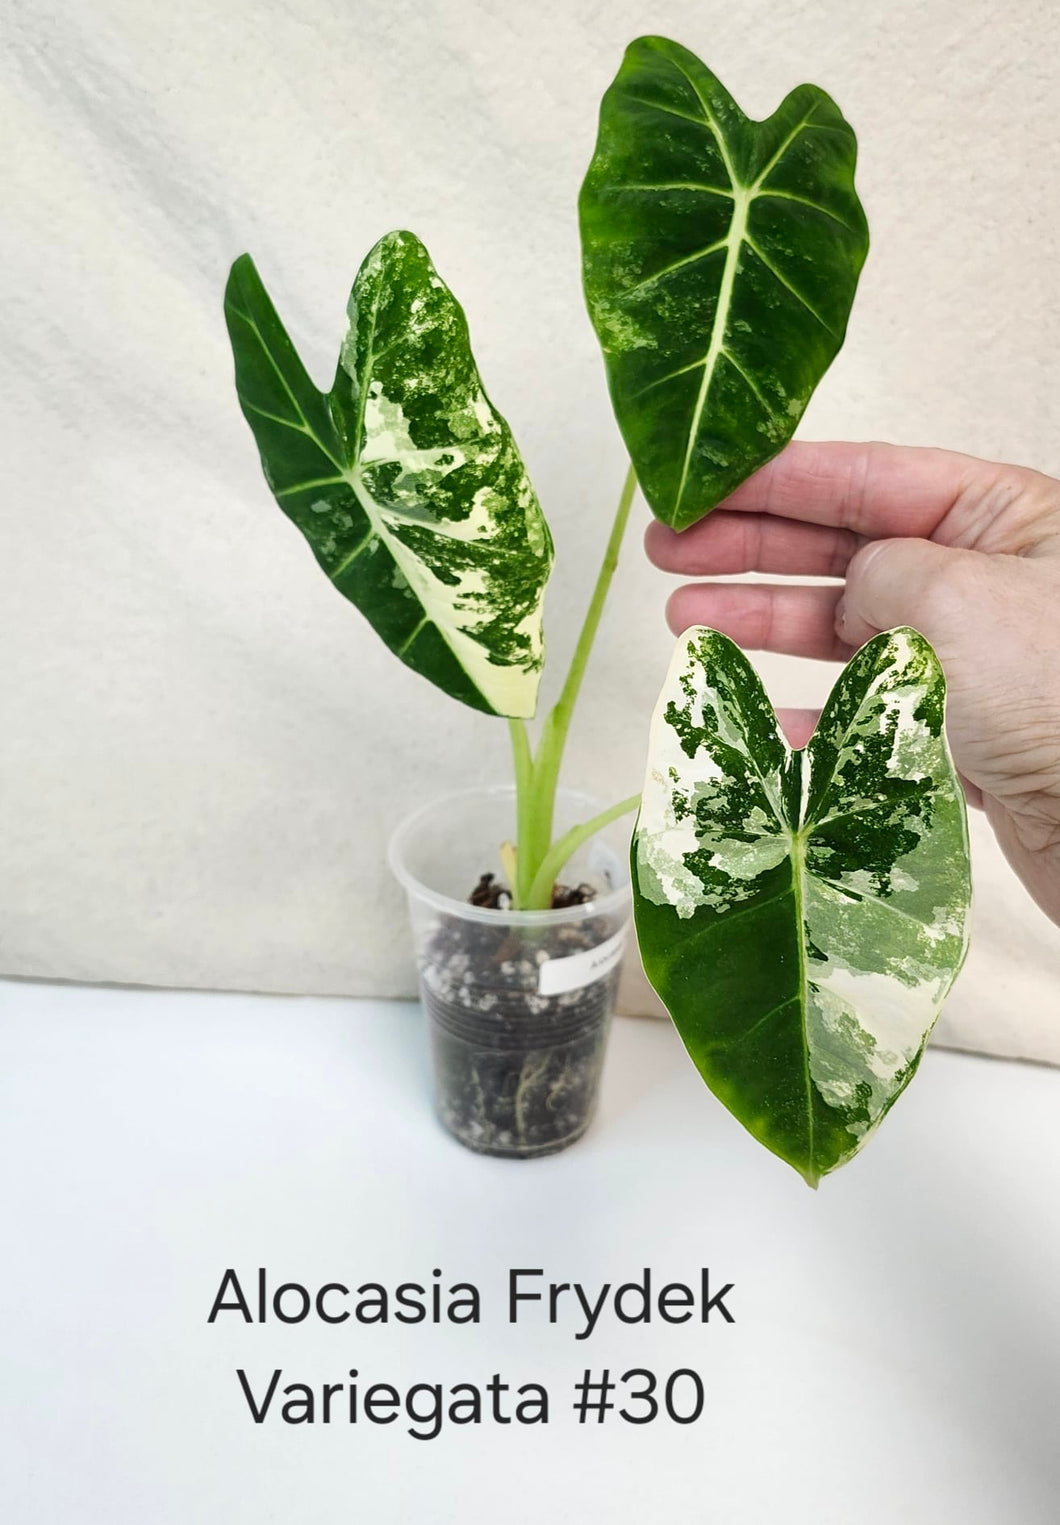 Alocasia frydek variegata #30